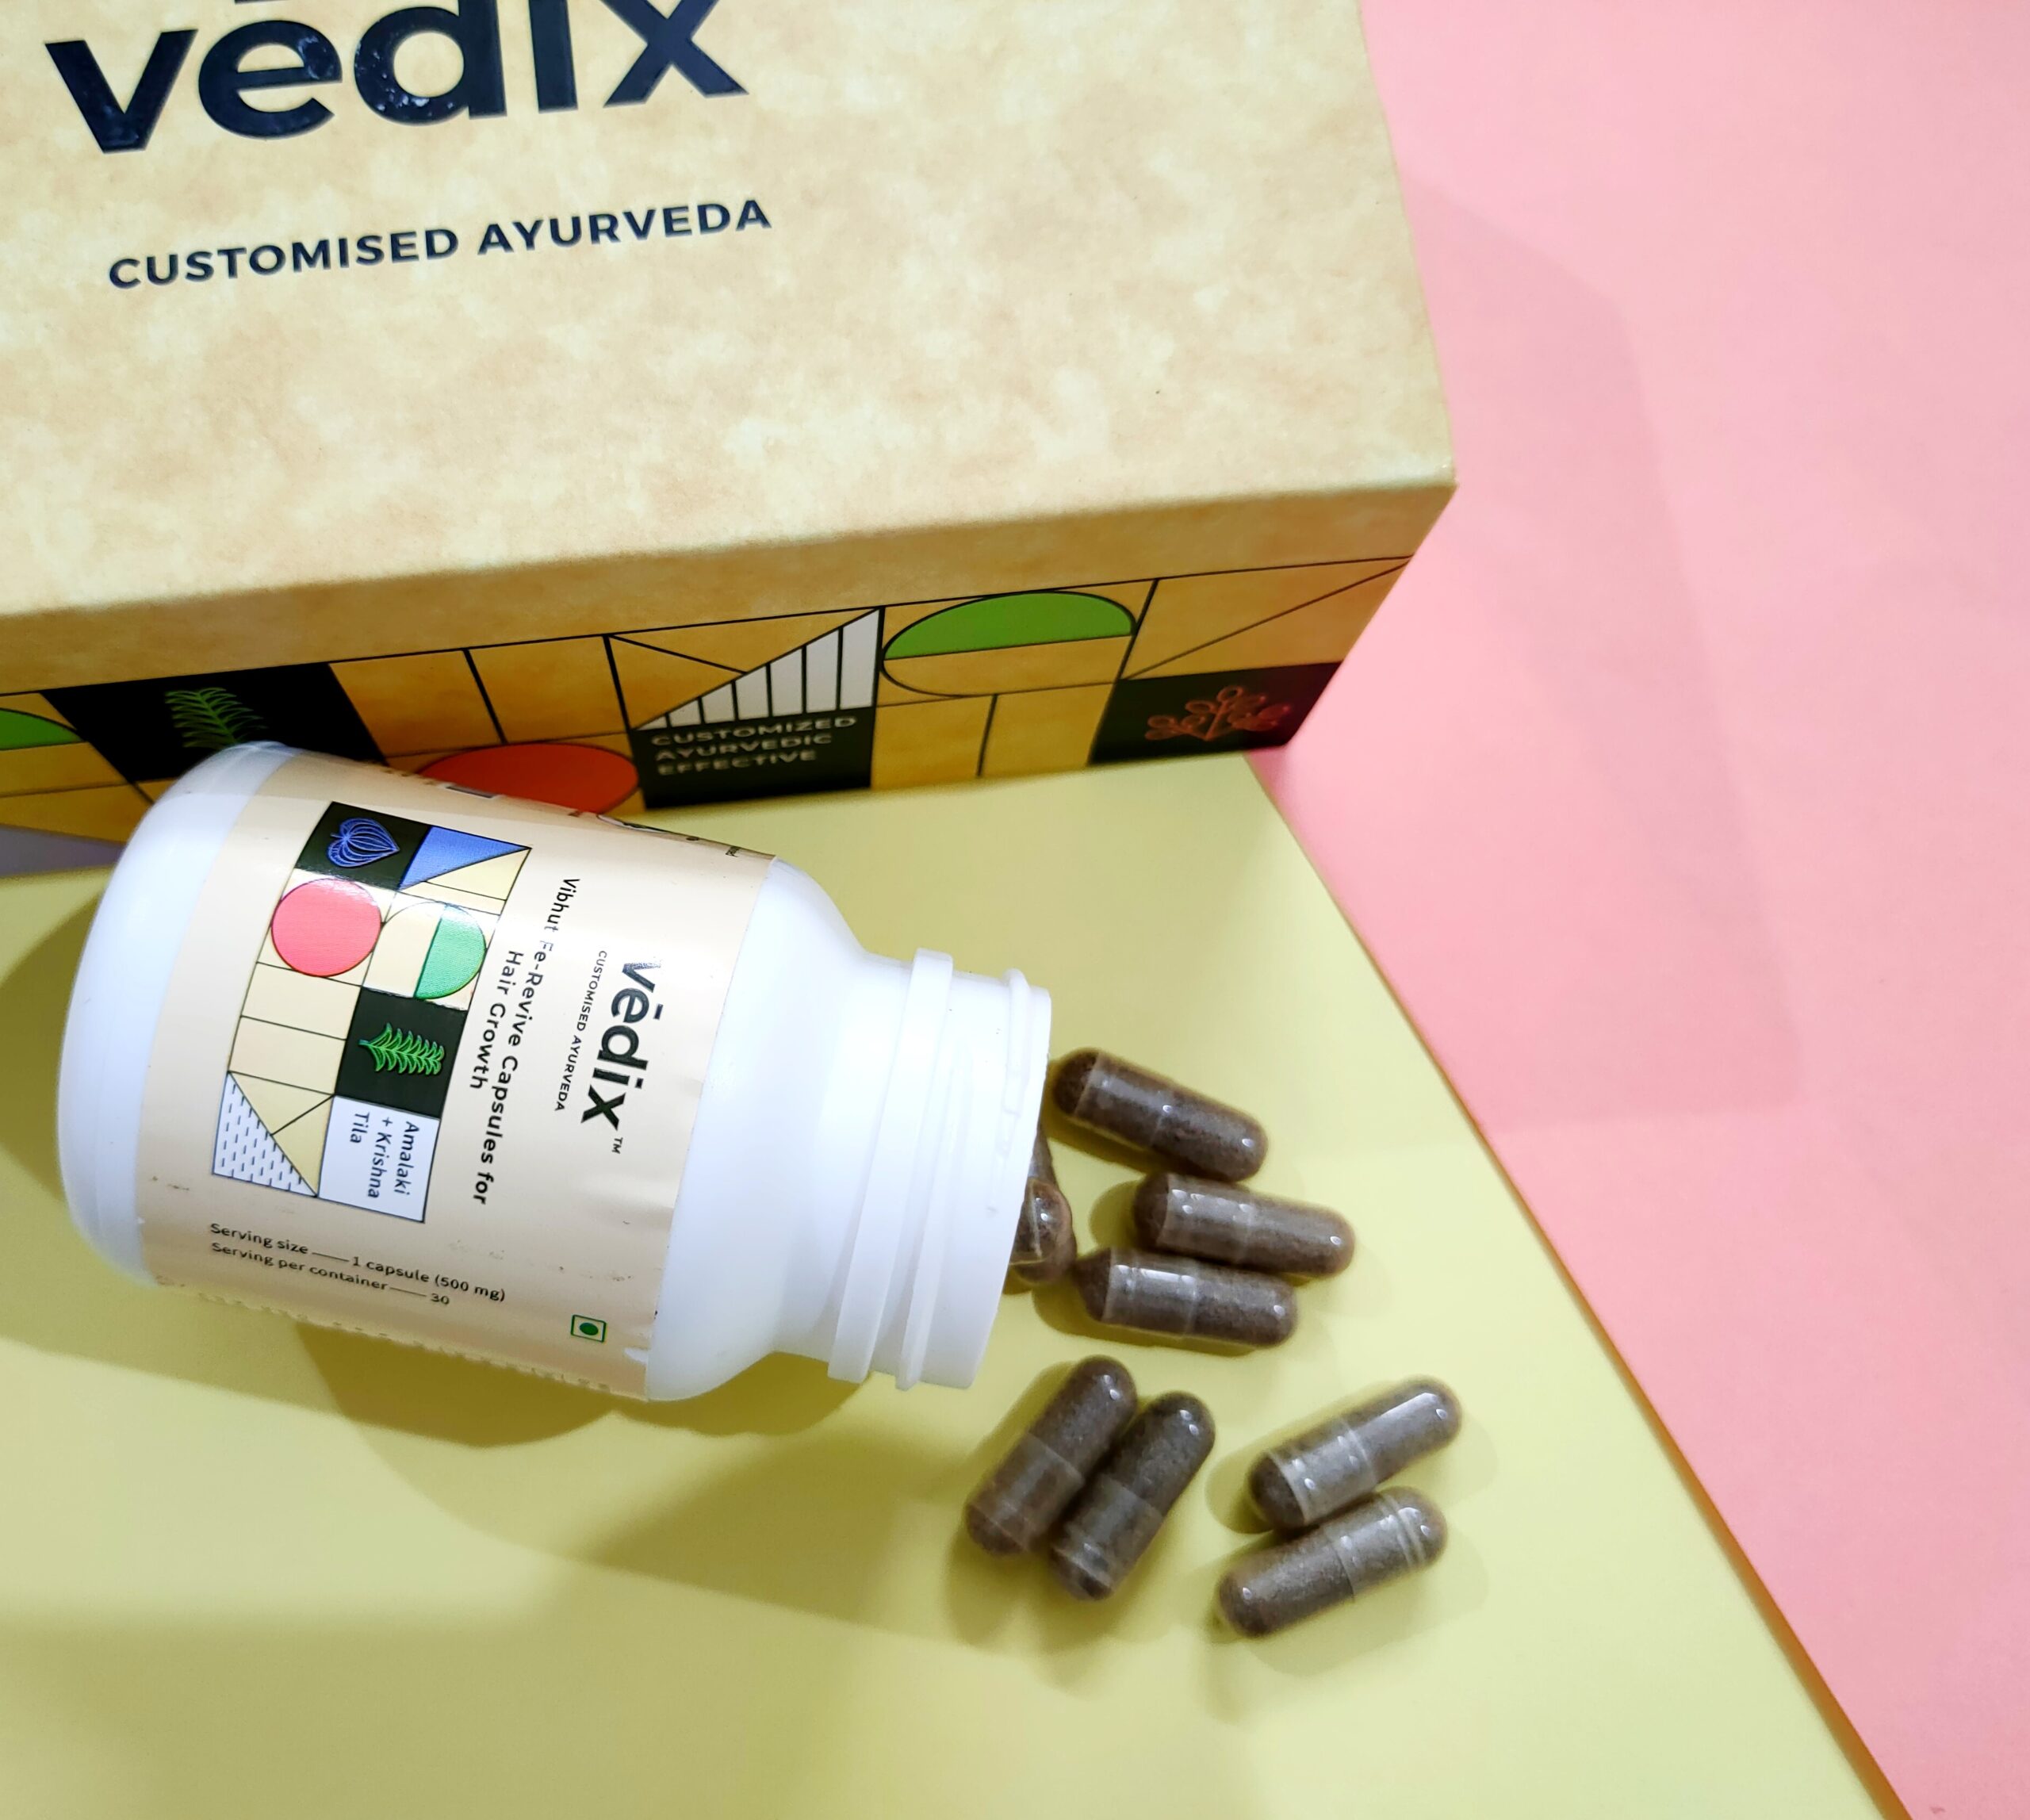 Vedix Customized Wellness Regimen Review